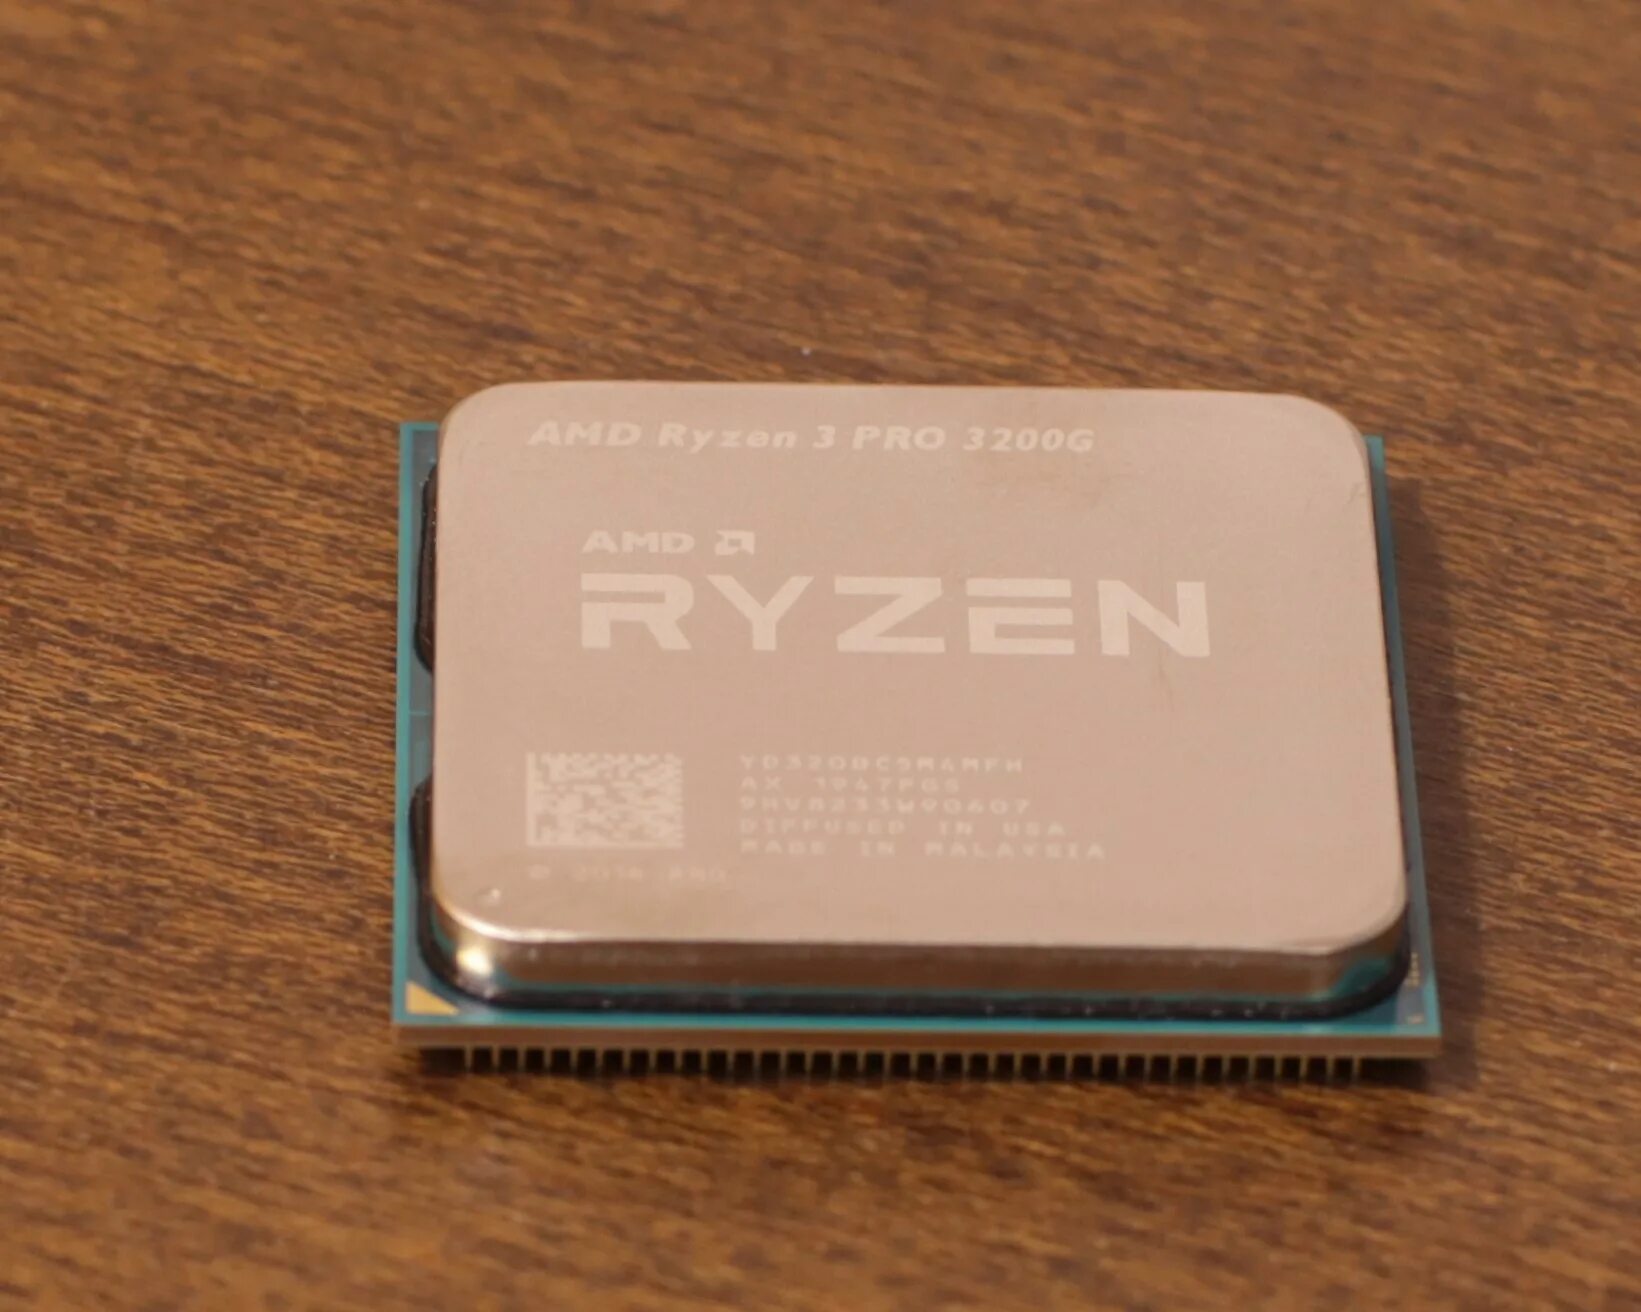 AMD Ryzen 3 Pro 3200g. Процессор AMD Ryzen 3 3200g. Процессор AMD Ryzen 3 3200g am4. Ryzen 3 Pro 3200g процессор. 3 pro 3200g